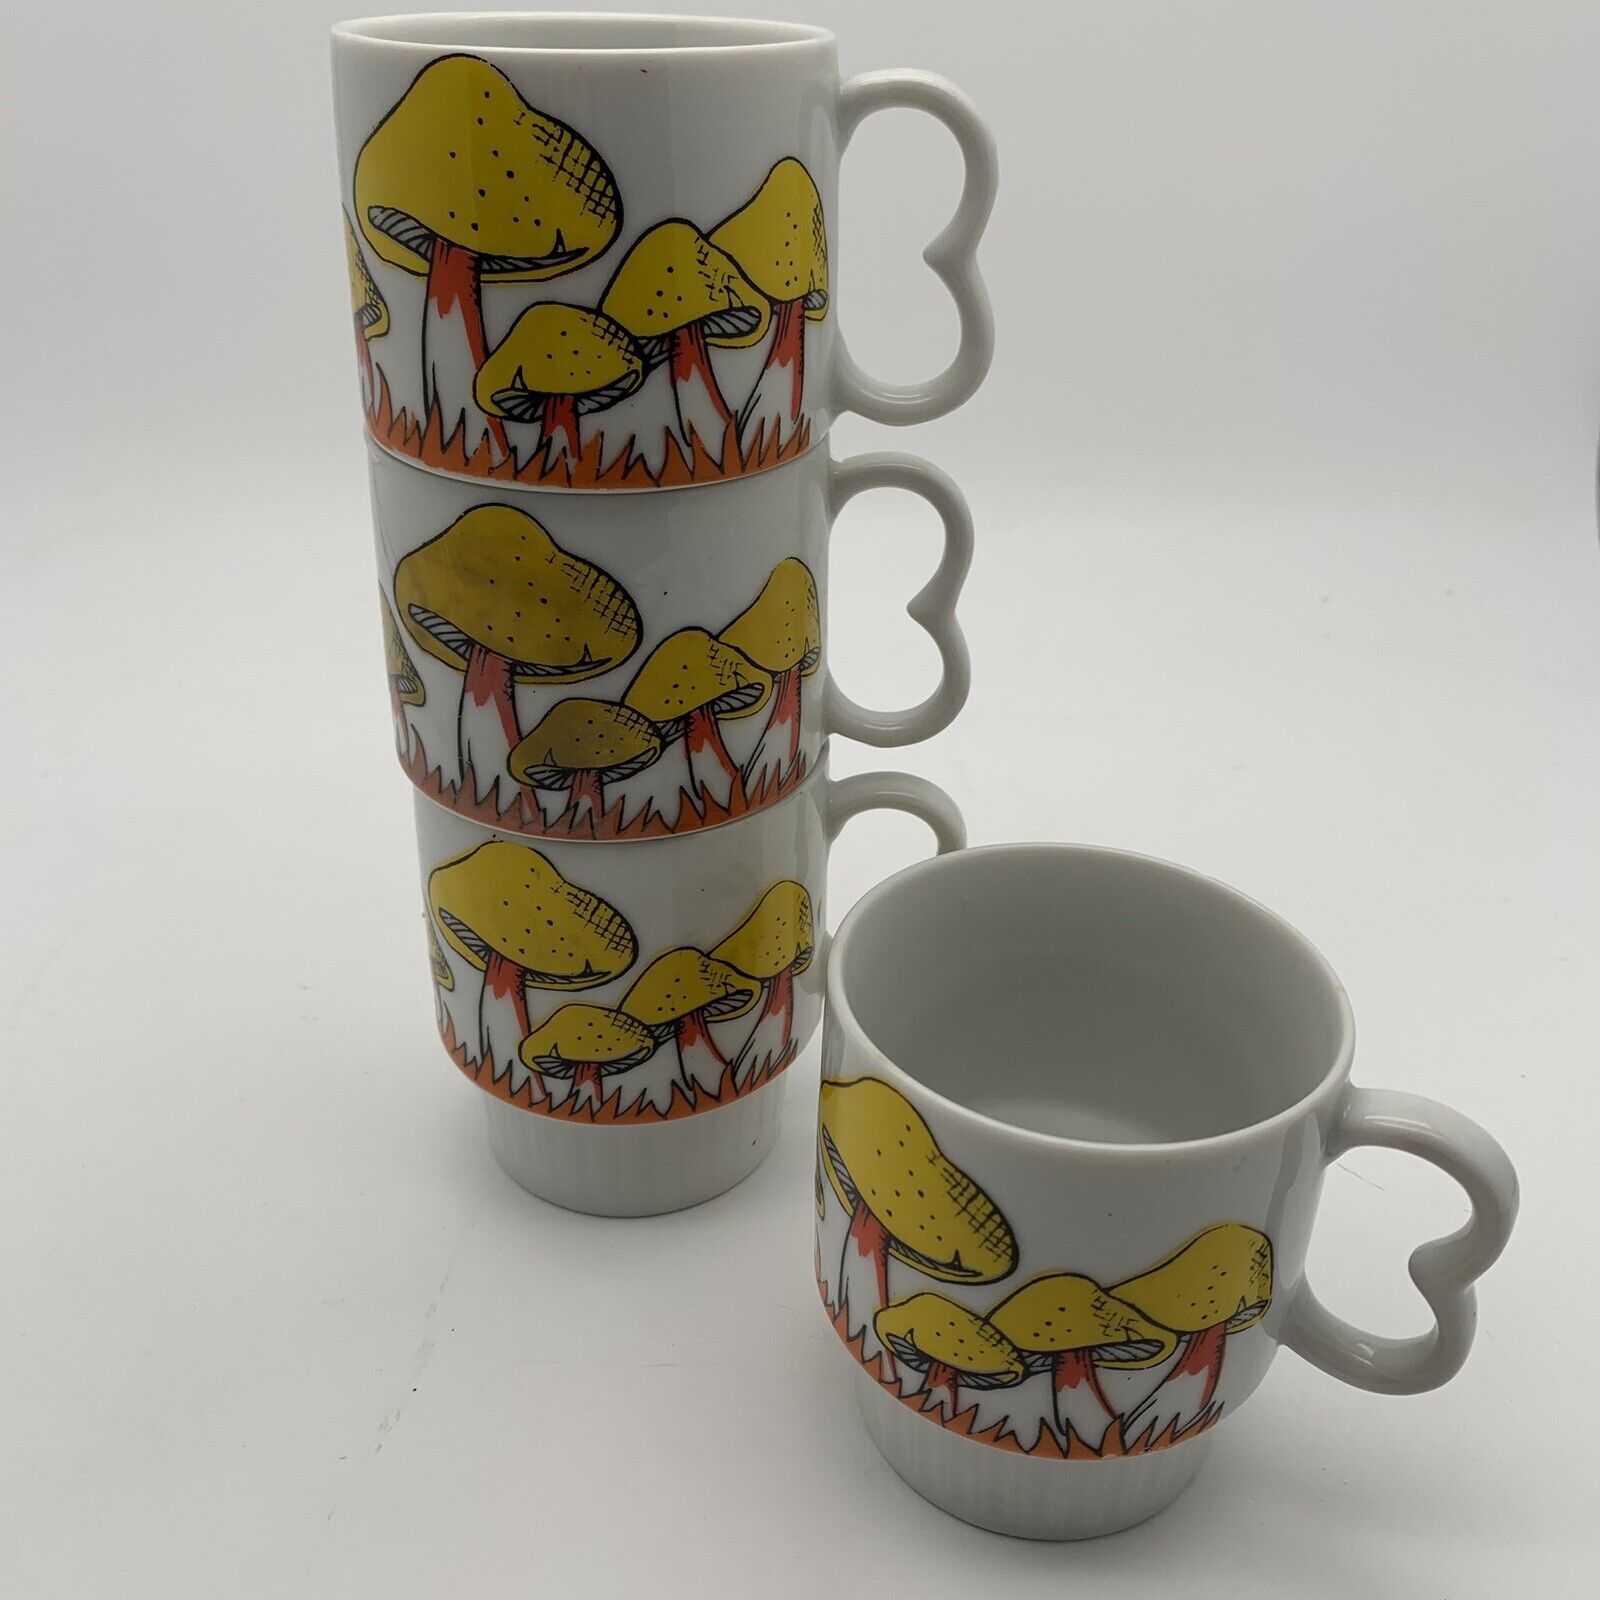 4 Vintage Retro 1970s Yellow Mushroom Mugs Coffee Tea Stackable S1 Japan Cups